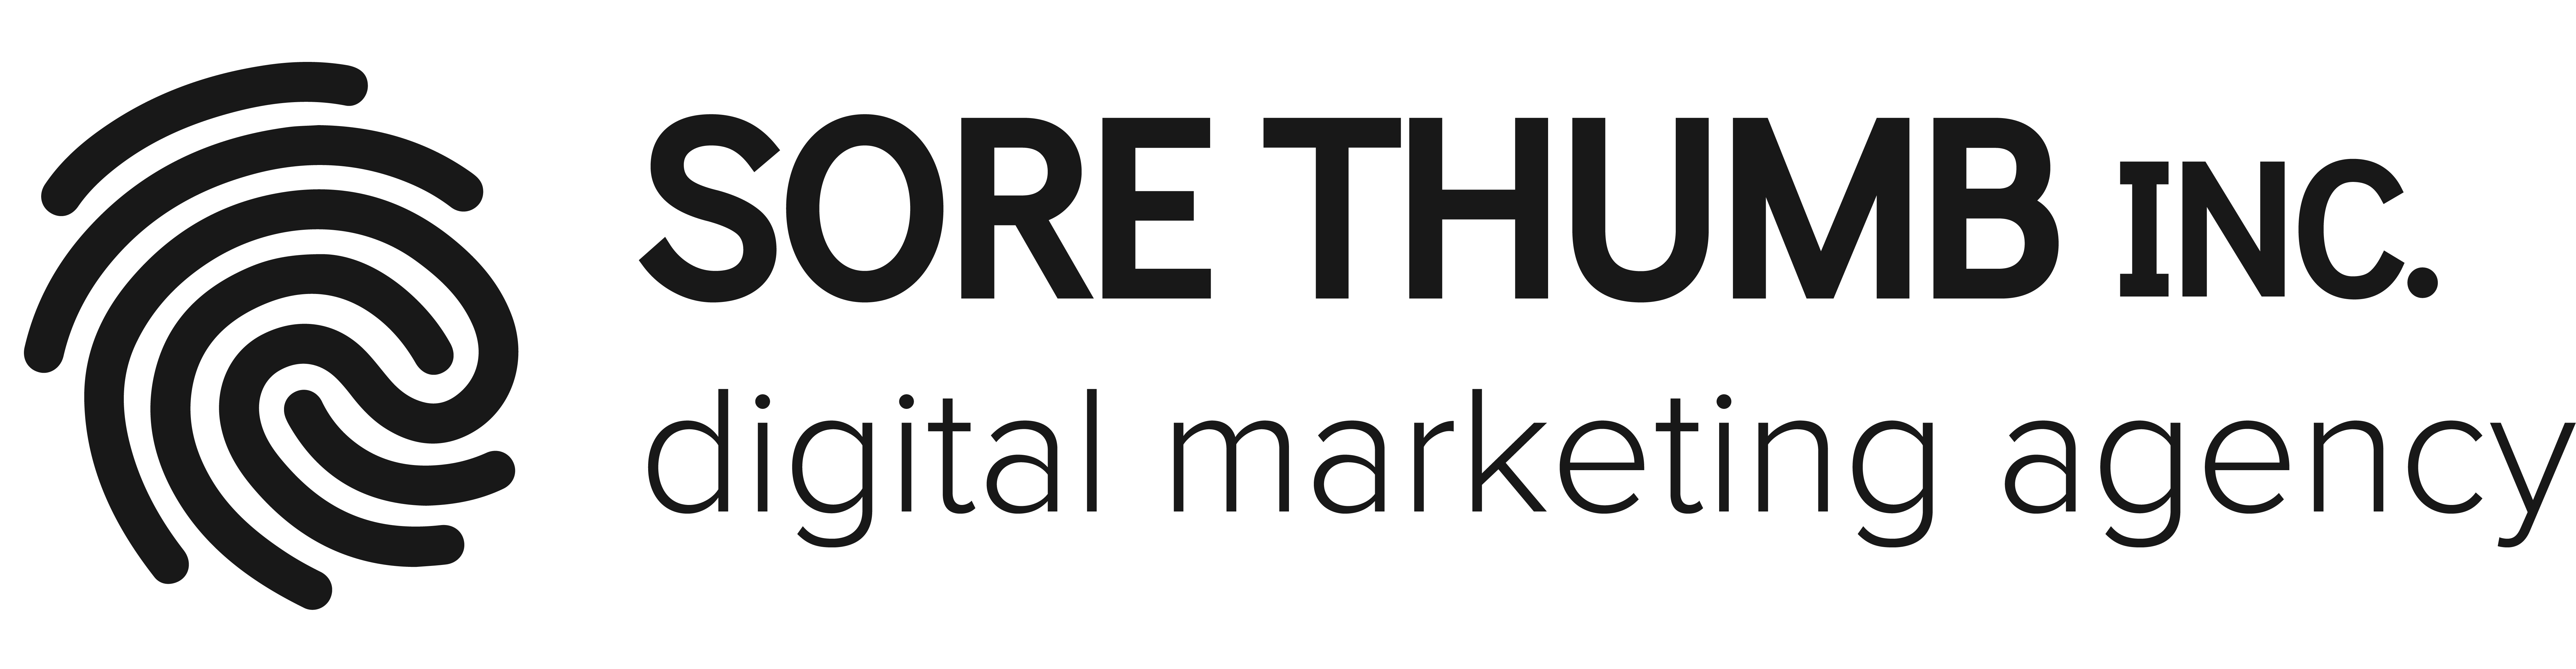 Sore Thumb Inc. Logo.